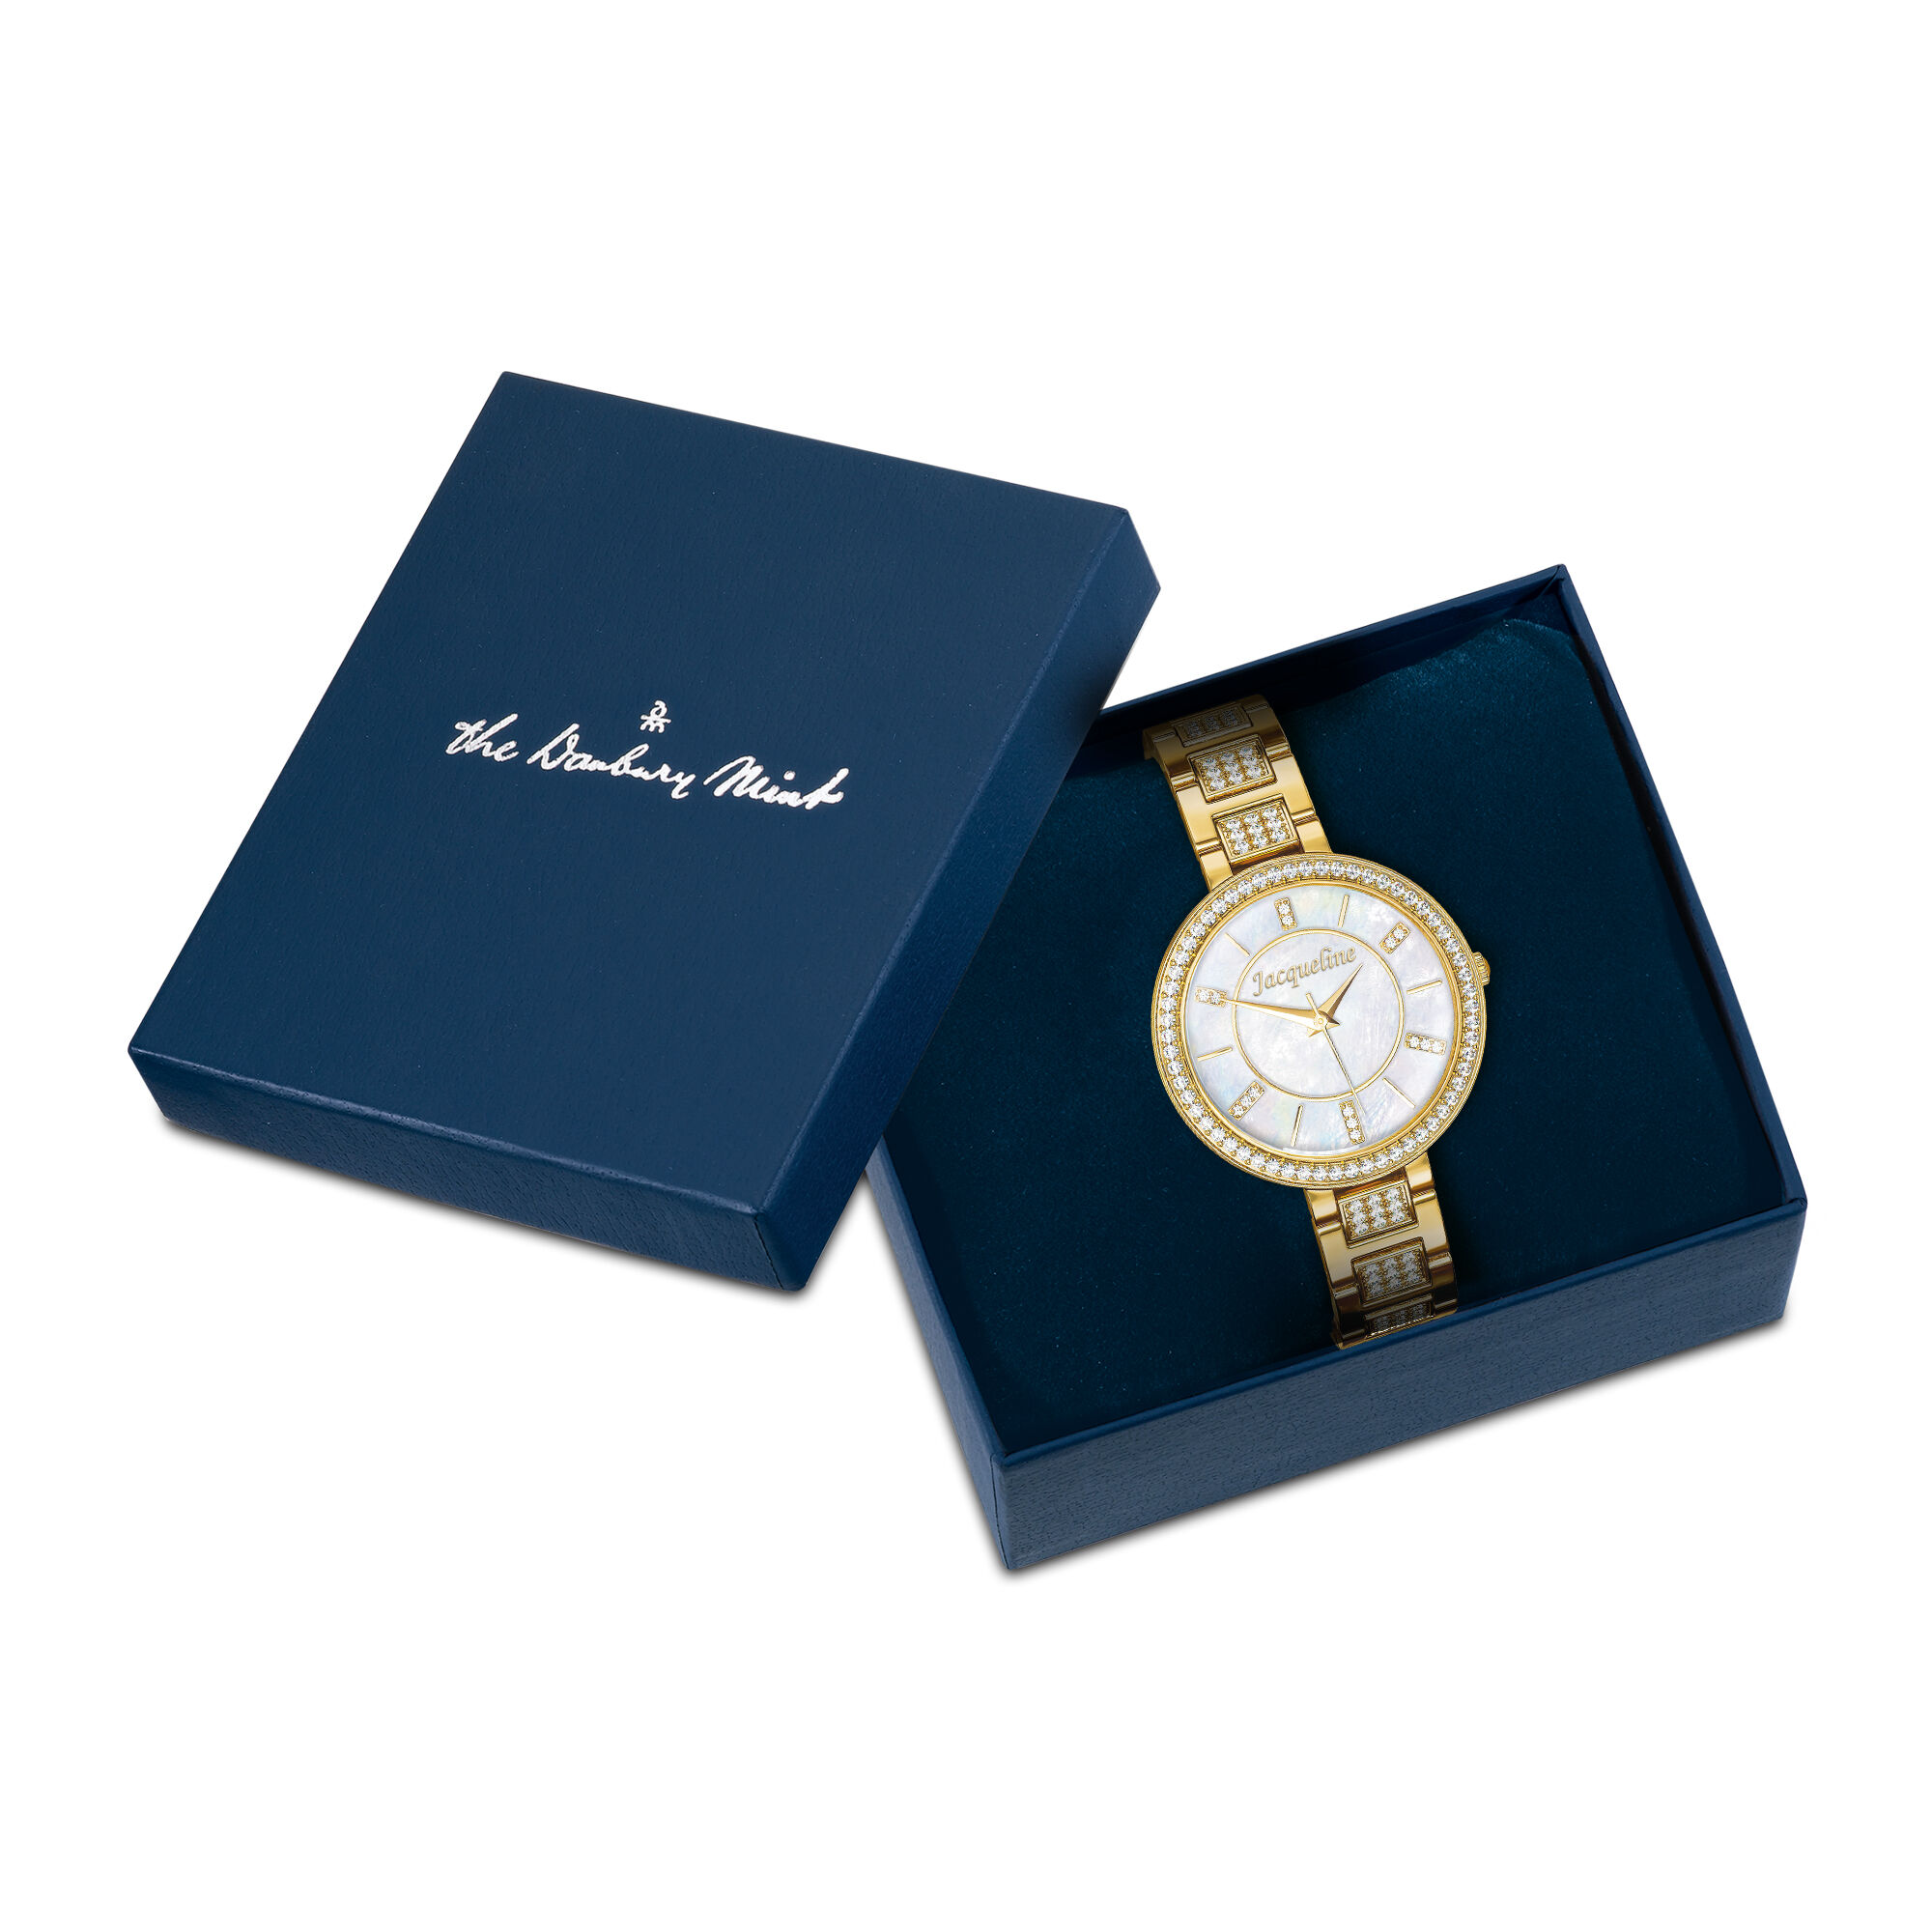 Custom Made Watch 11266 0014 g giftbox